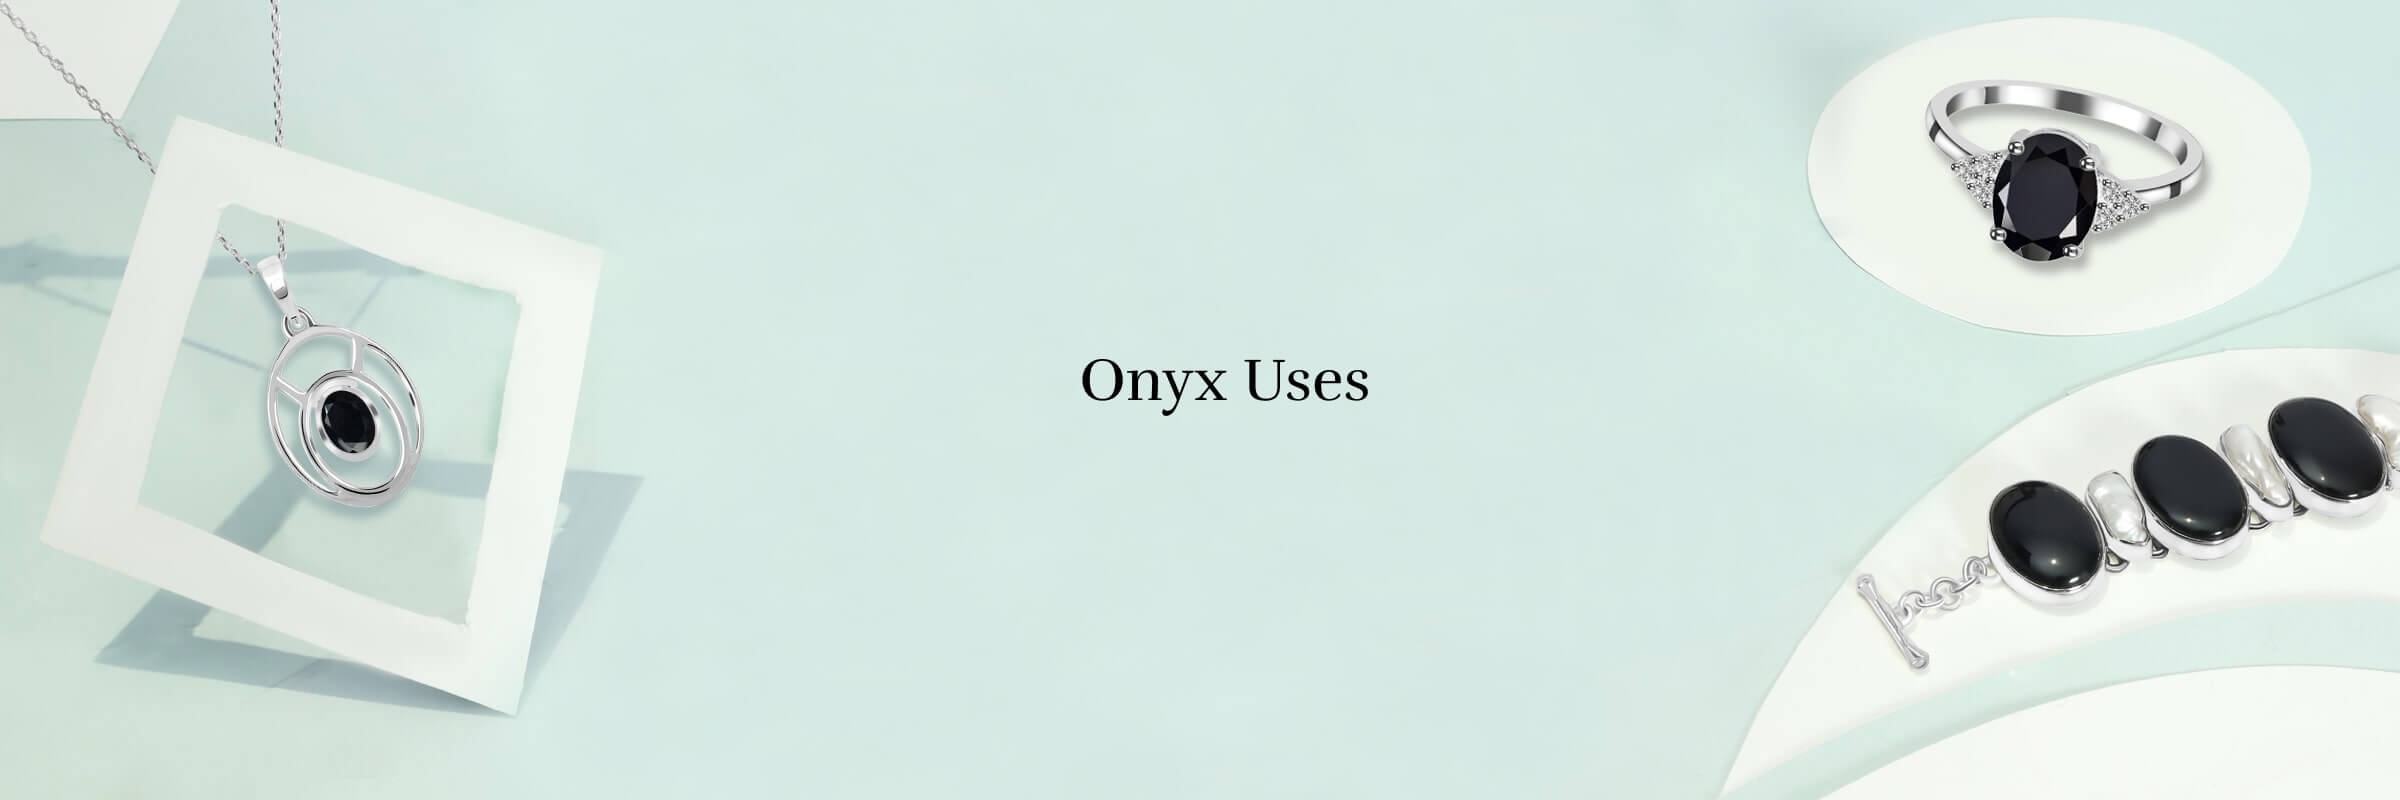 Uses of onyx